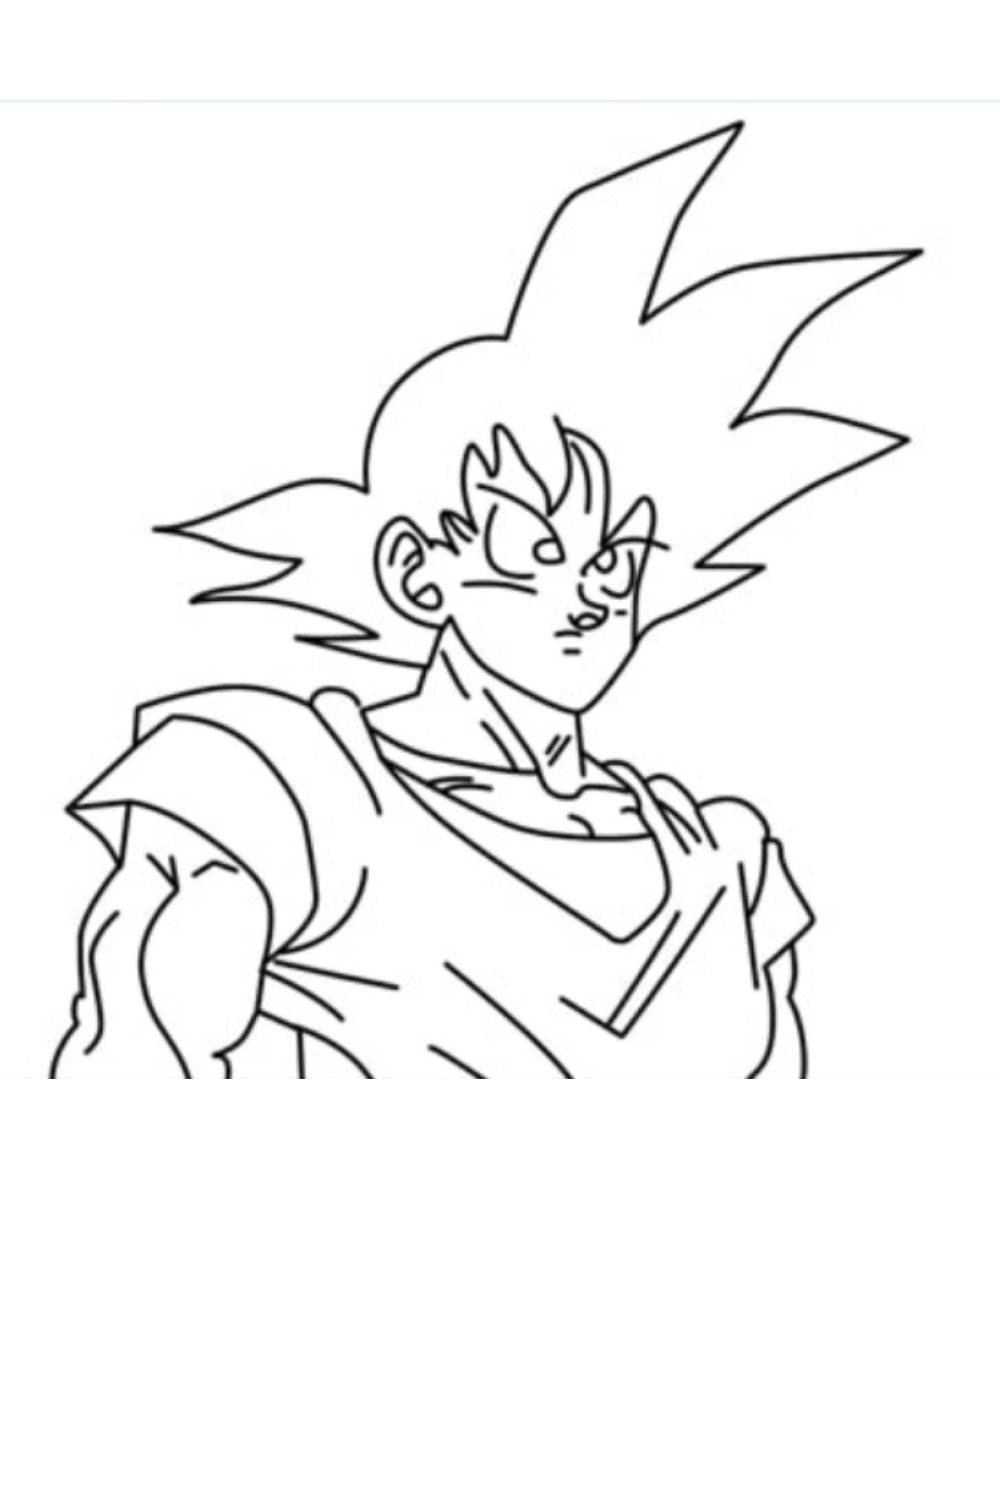 Goku Pencil drawing practice by shashidhar90 on DeviantArt